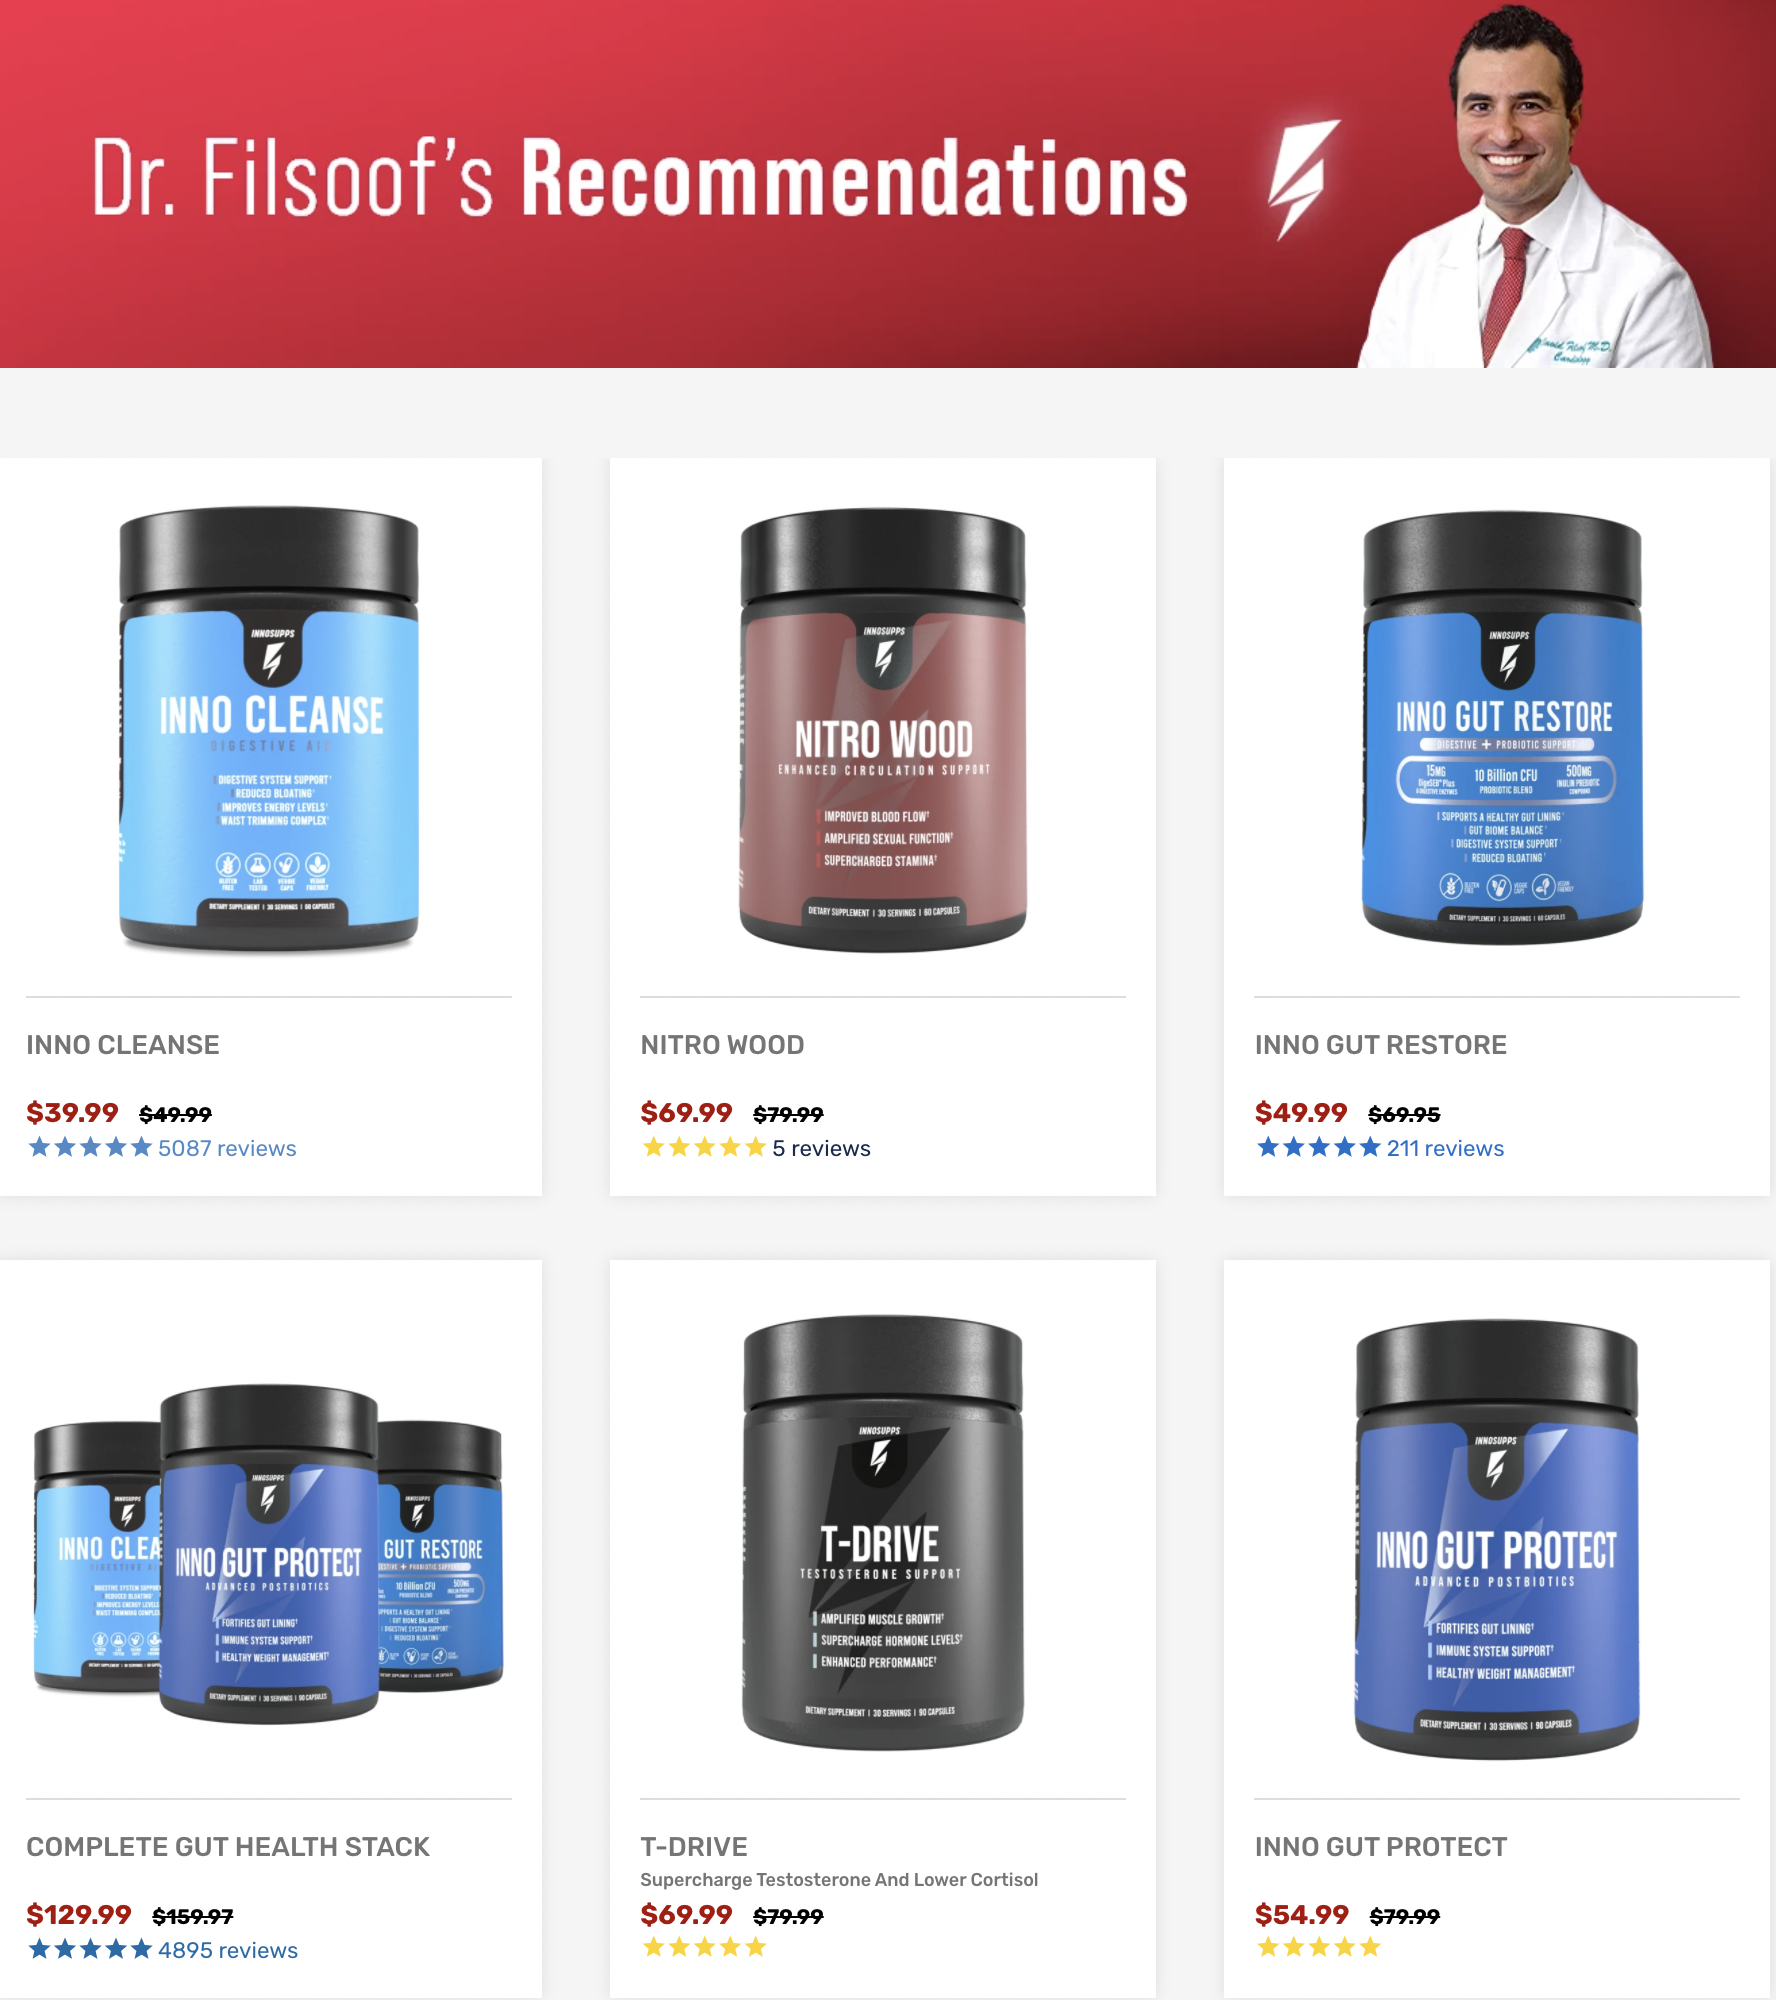 Dr. Filsoof Recommendation